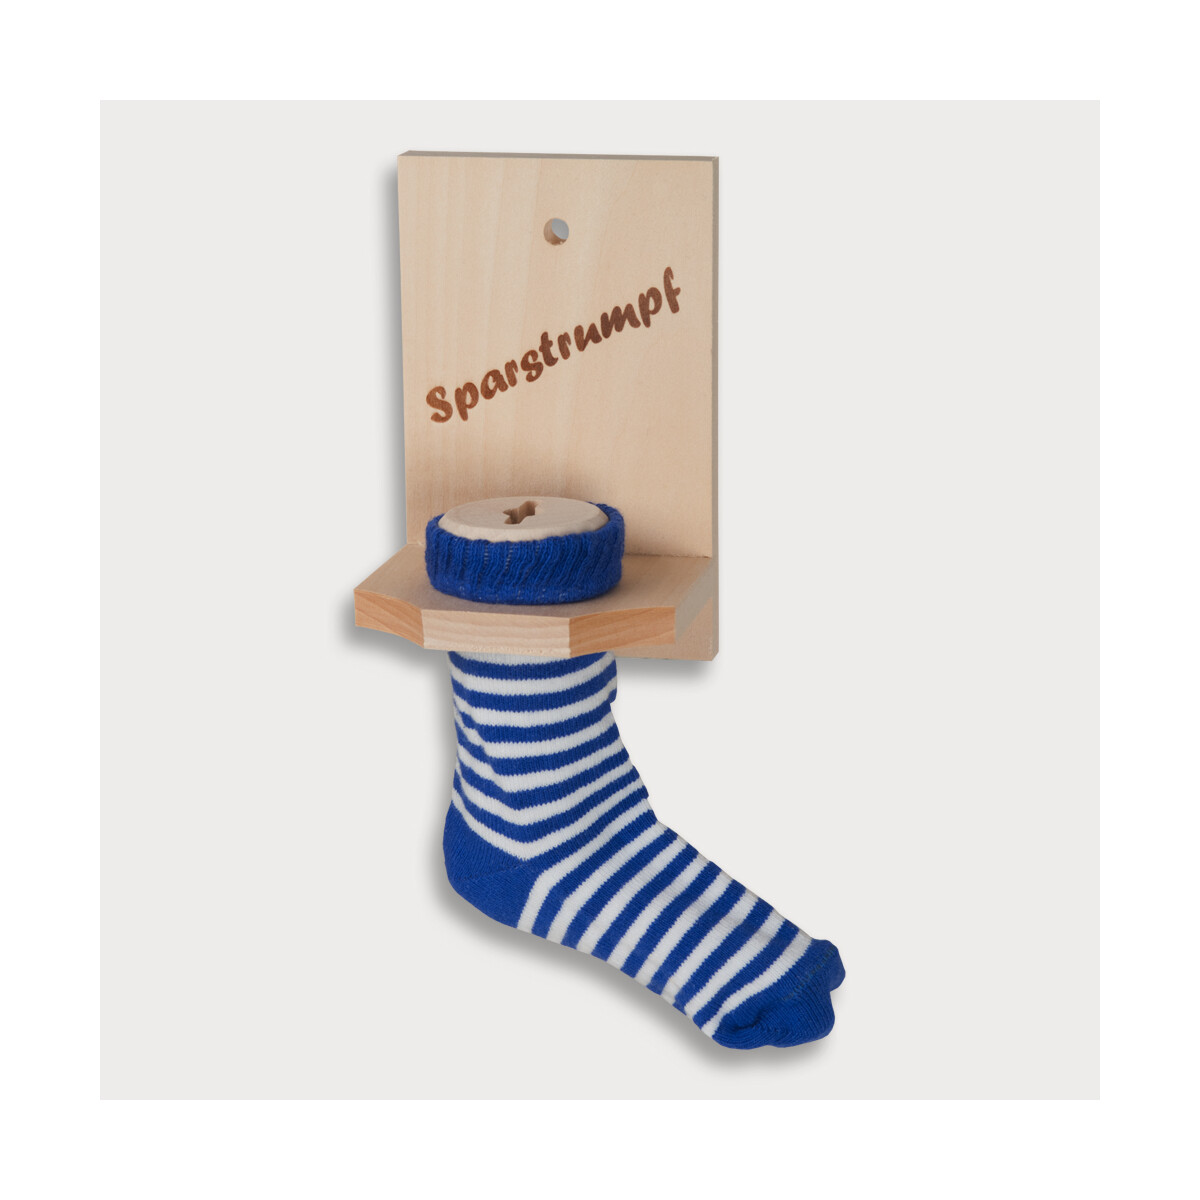 Sparstrumpf blaue Socke Einbrand "Sparstrumpf"...